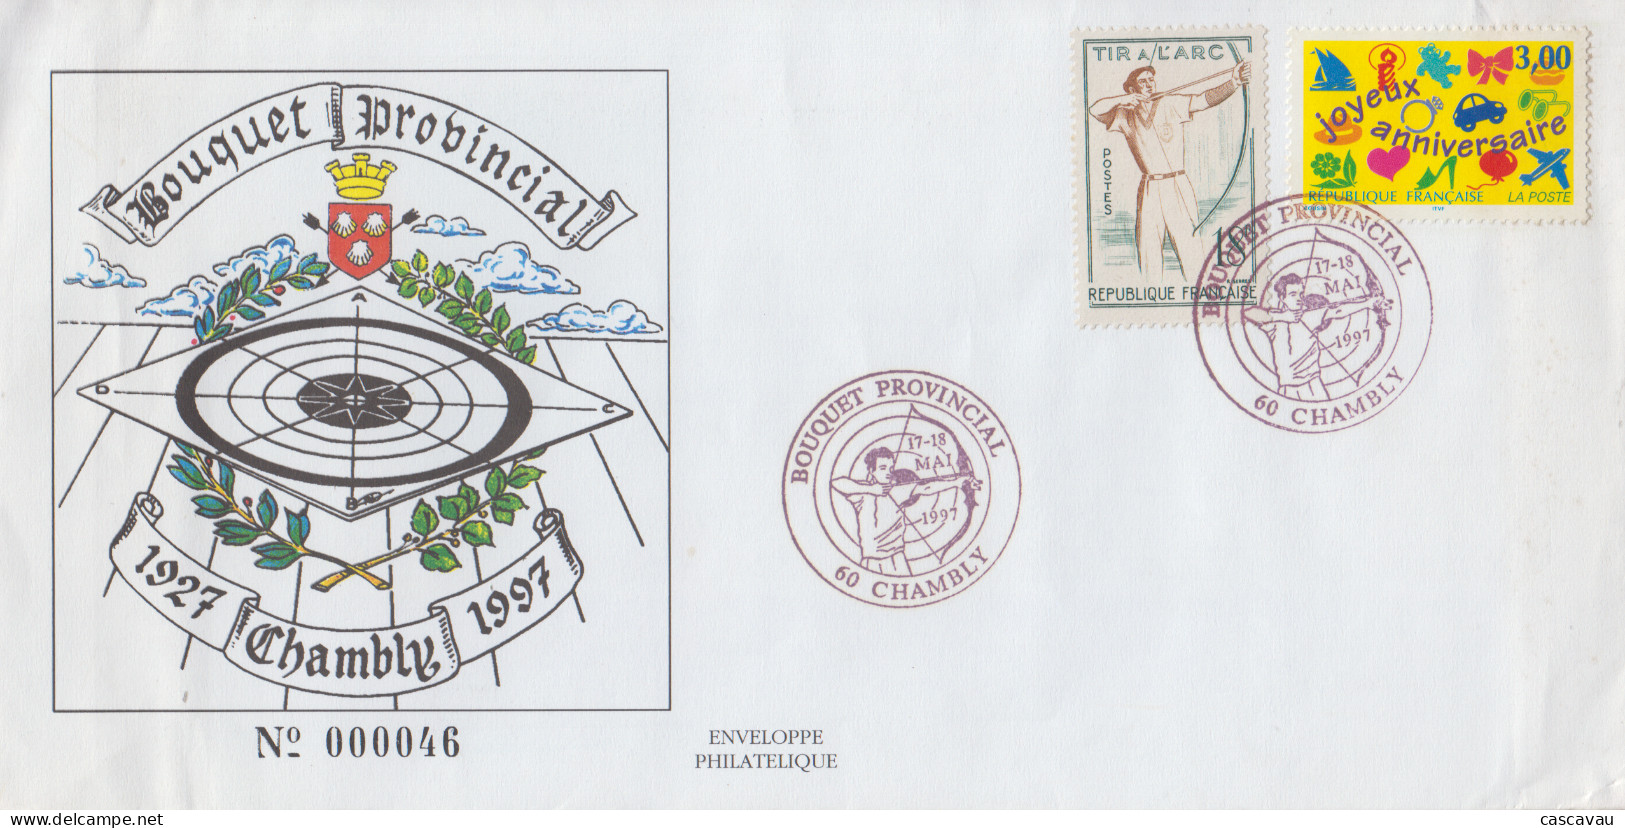 Enveloppe   FRANCE    TIR  A  L' ARC      BOUQUET  PROVINCIAL     CHAMBLY   1997 - Tiro Al Arco